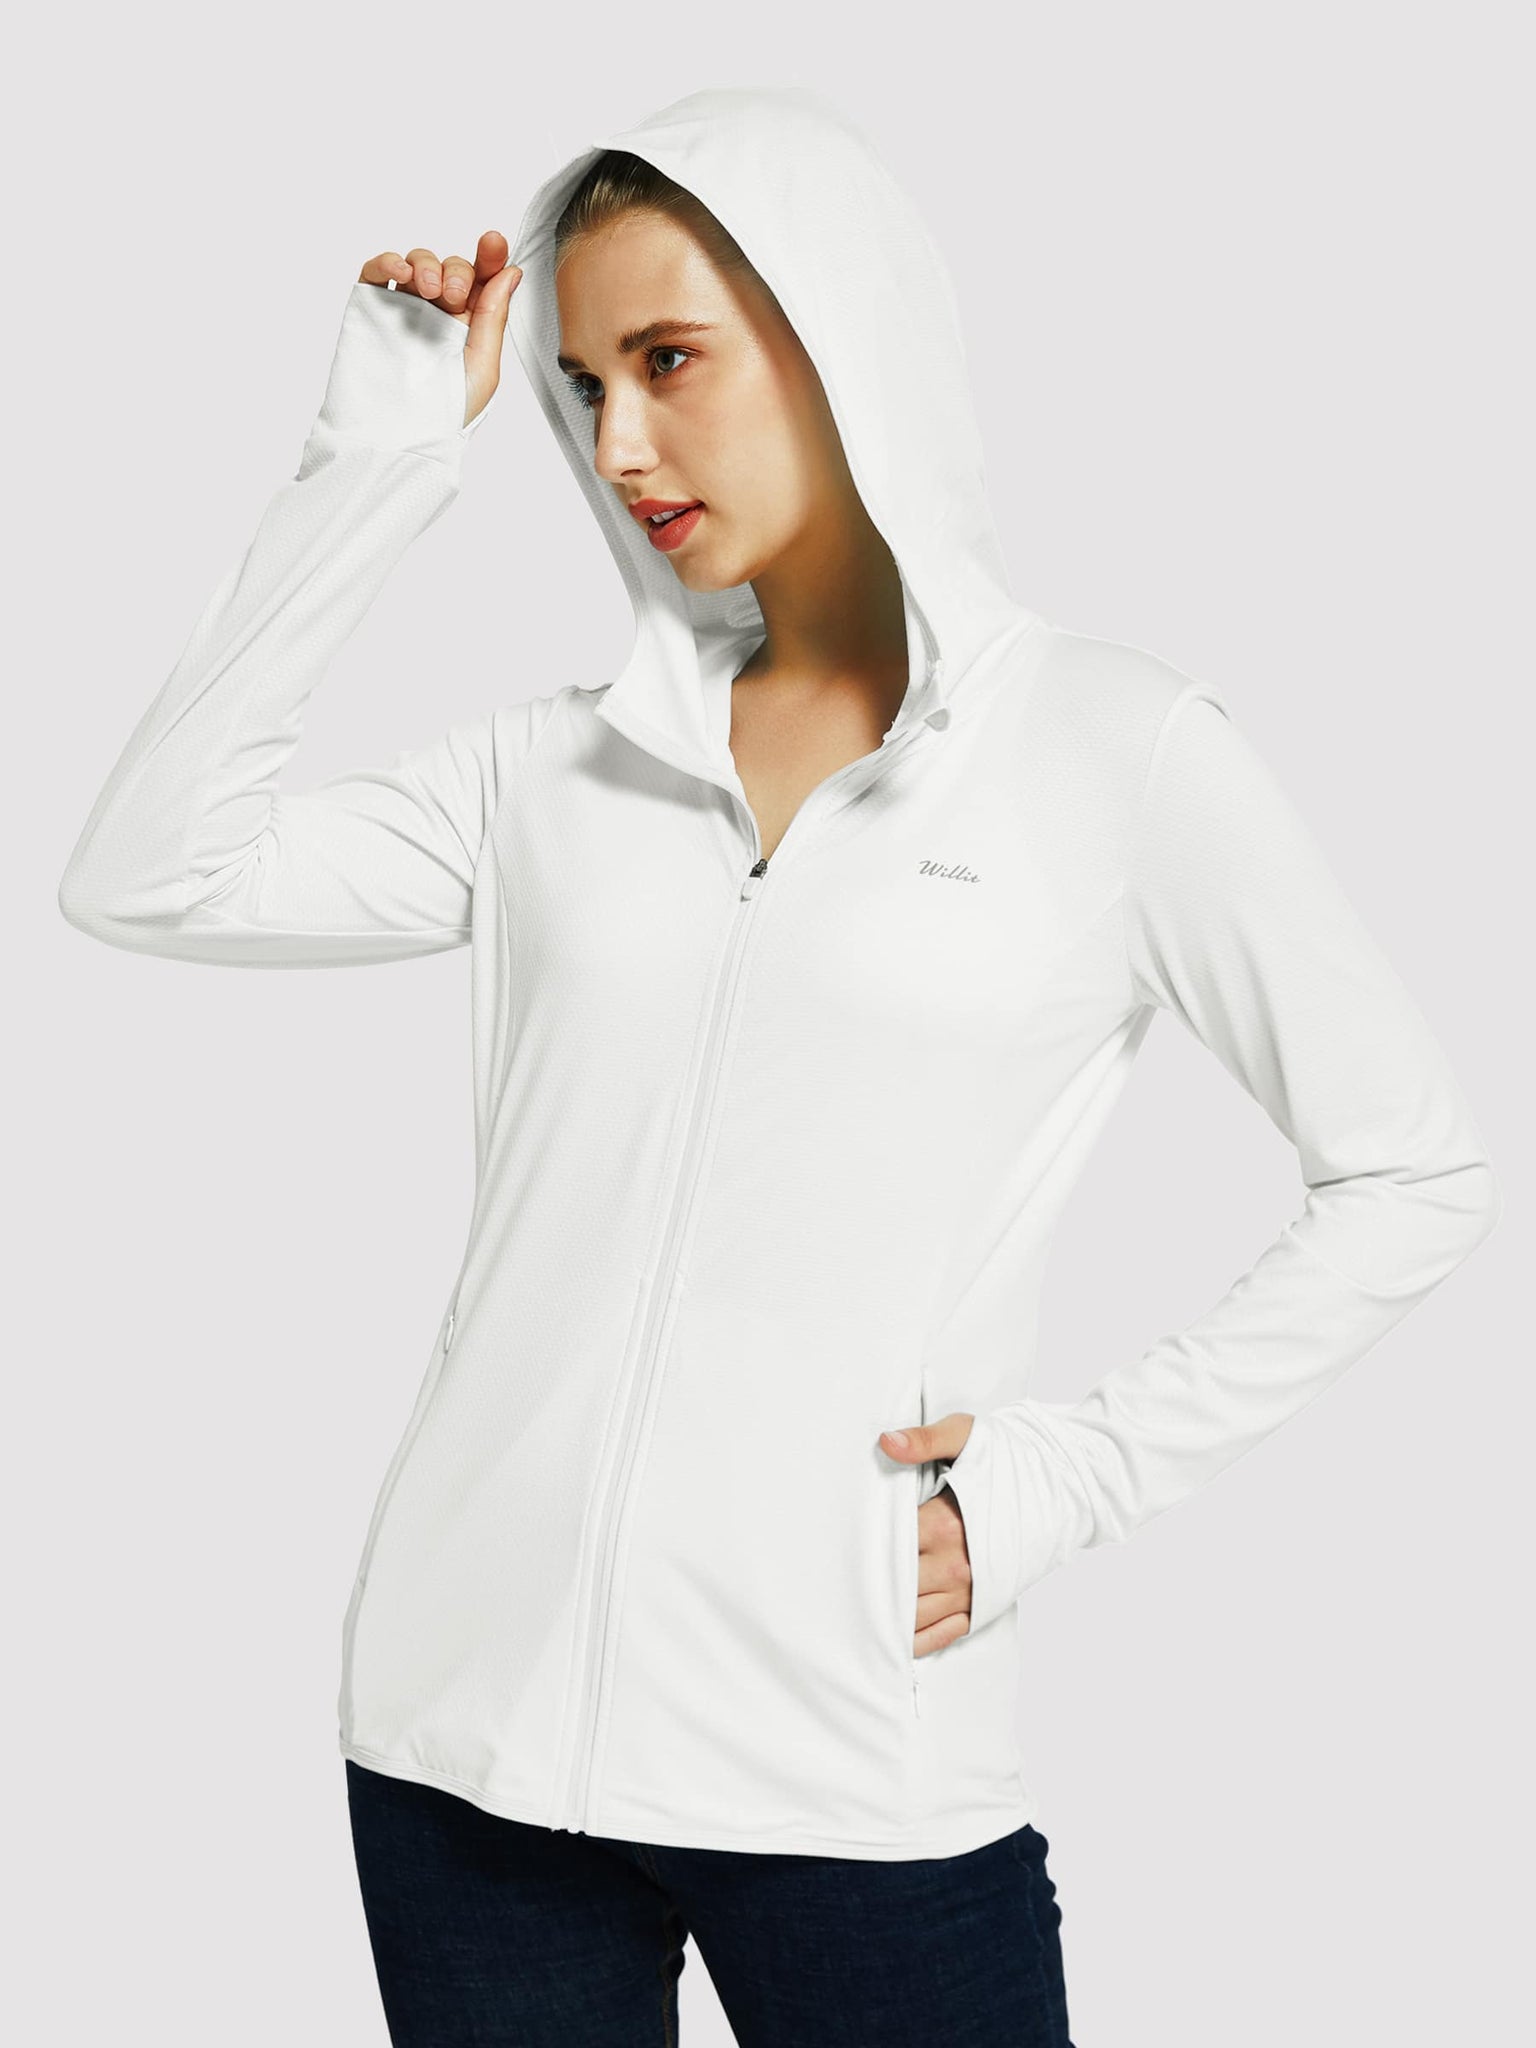 Willit Women's Outdoor Sun Protection Jacket Full Zip_White_model1